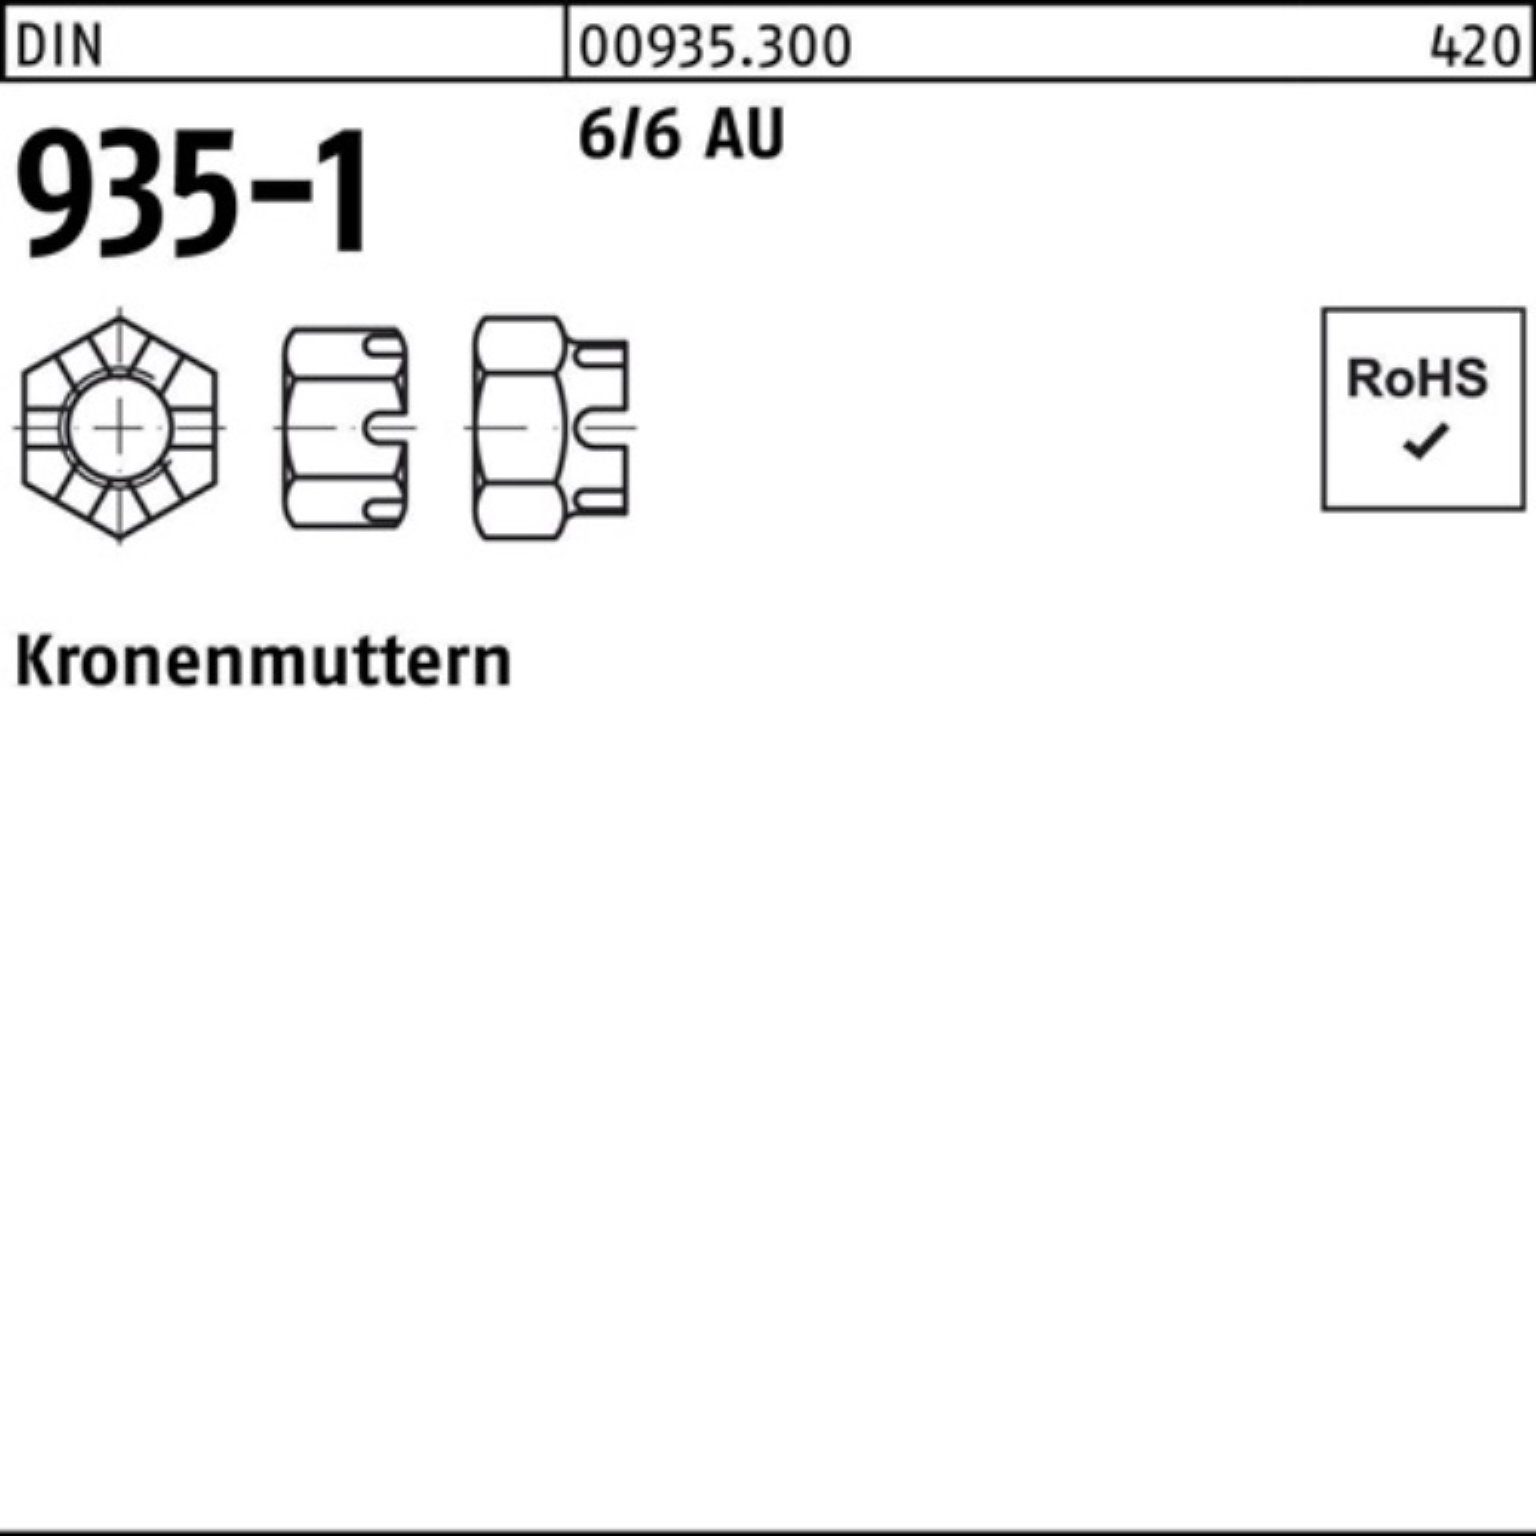 Reyher Kronenmutter 500er 17 DIN Pack M10 500 SW 935-1 Kronenmutter St Automatenstahl 6/6